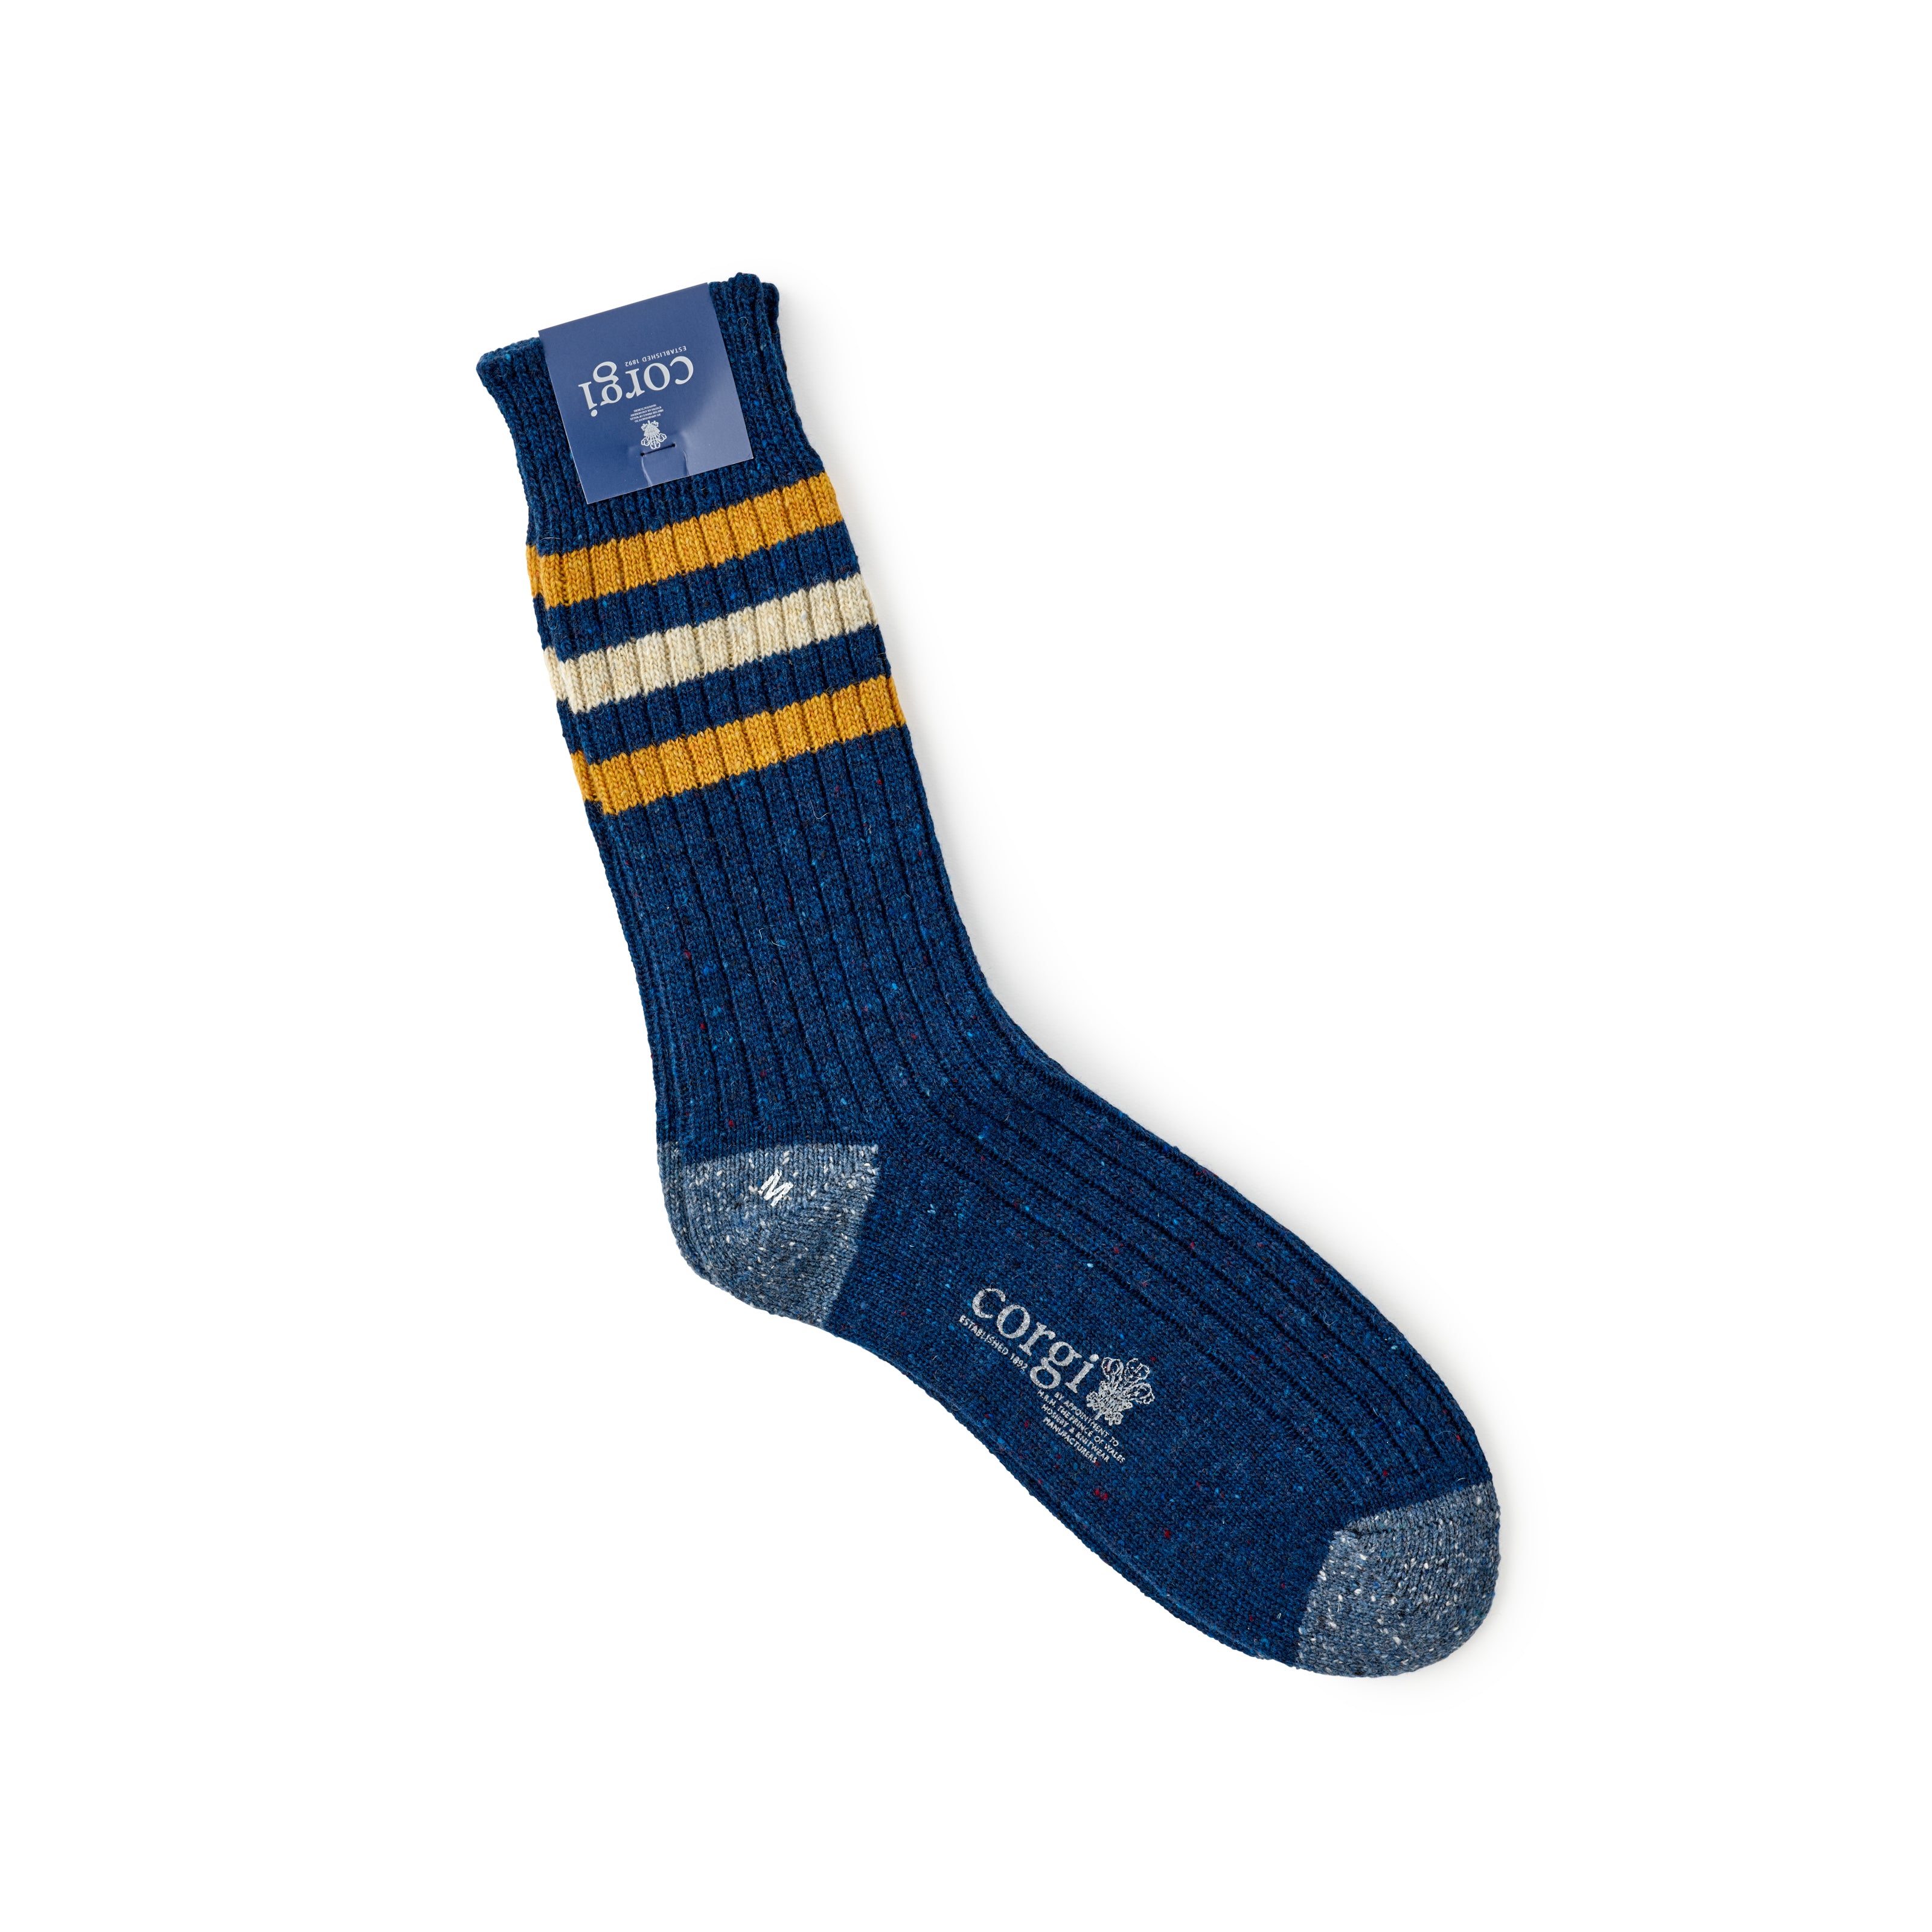 Corgi Sport Stripe Donegal Wool Socks : Navy